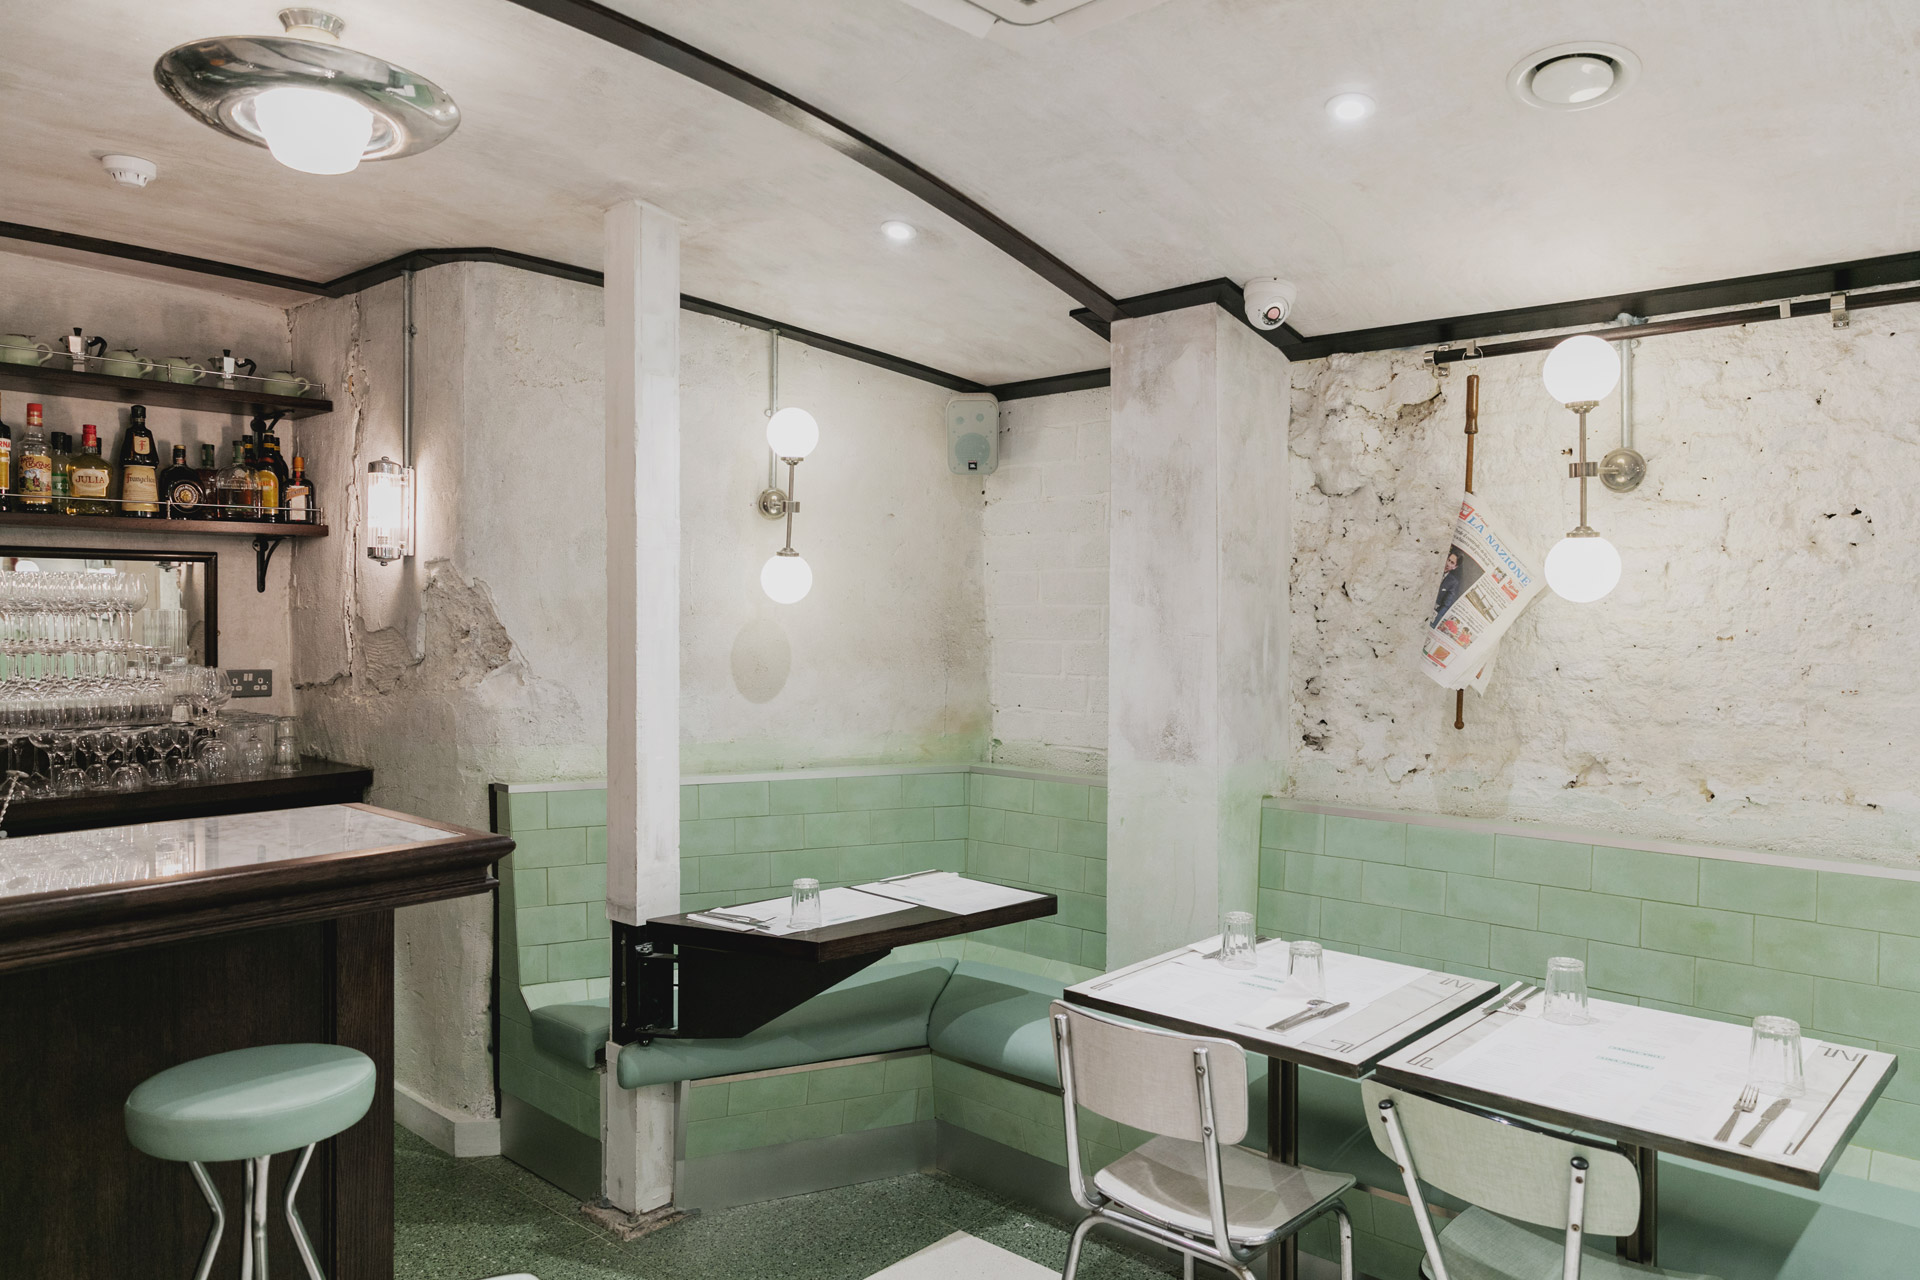 Legendary Italian delicatessen Lina Stores uses our globe wall lights in new Soho restaurant